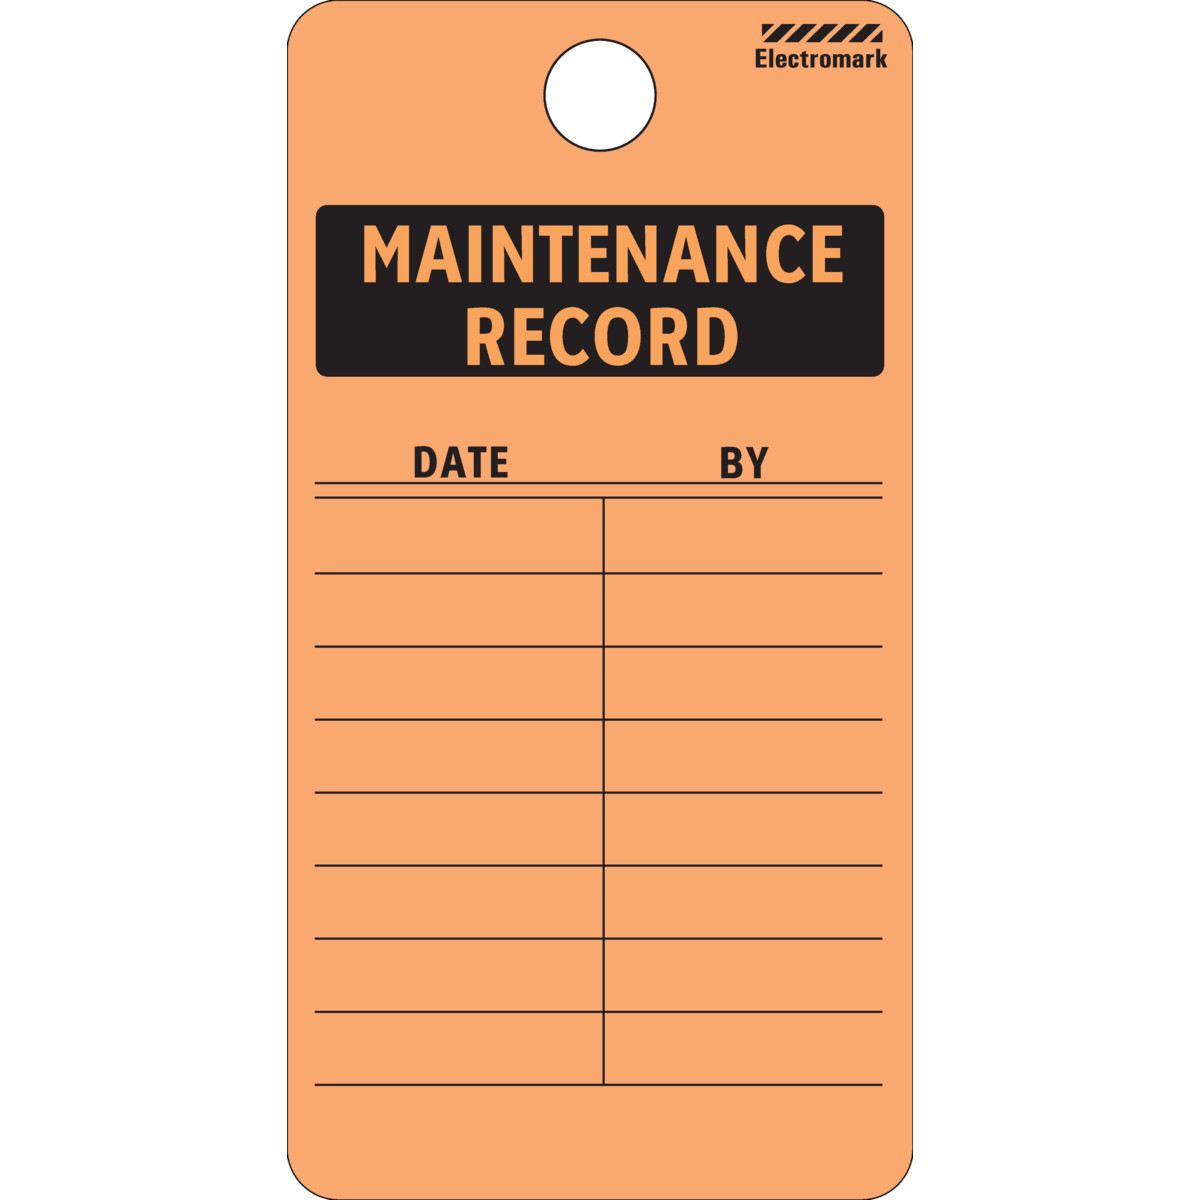 Maintenance Record Tag - Vinyl